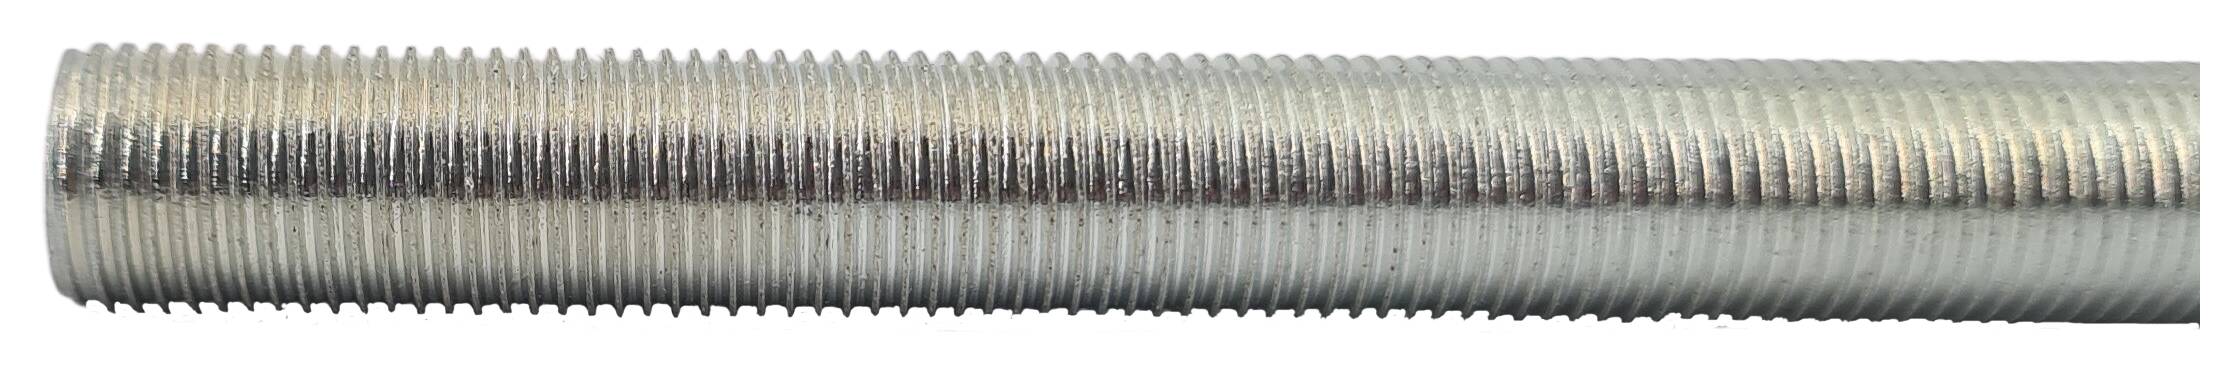 iron thread tube M10x1x320 round zinc